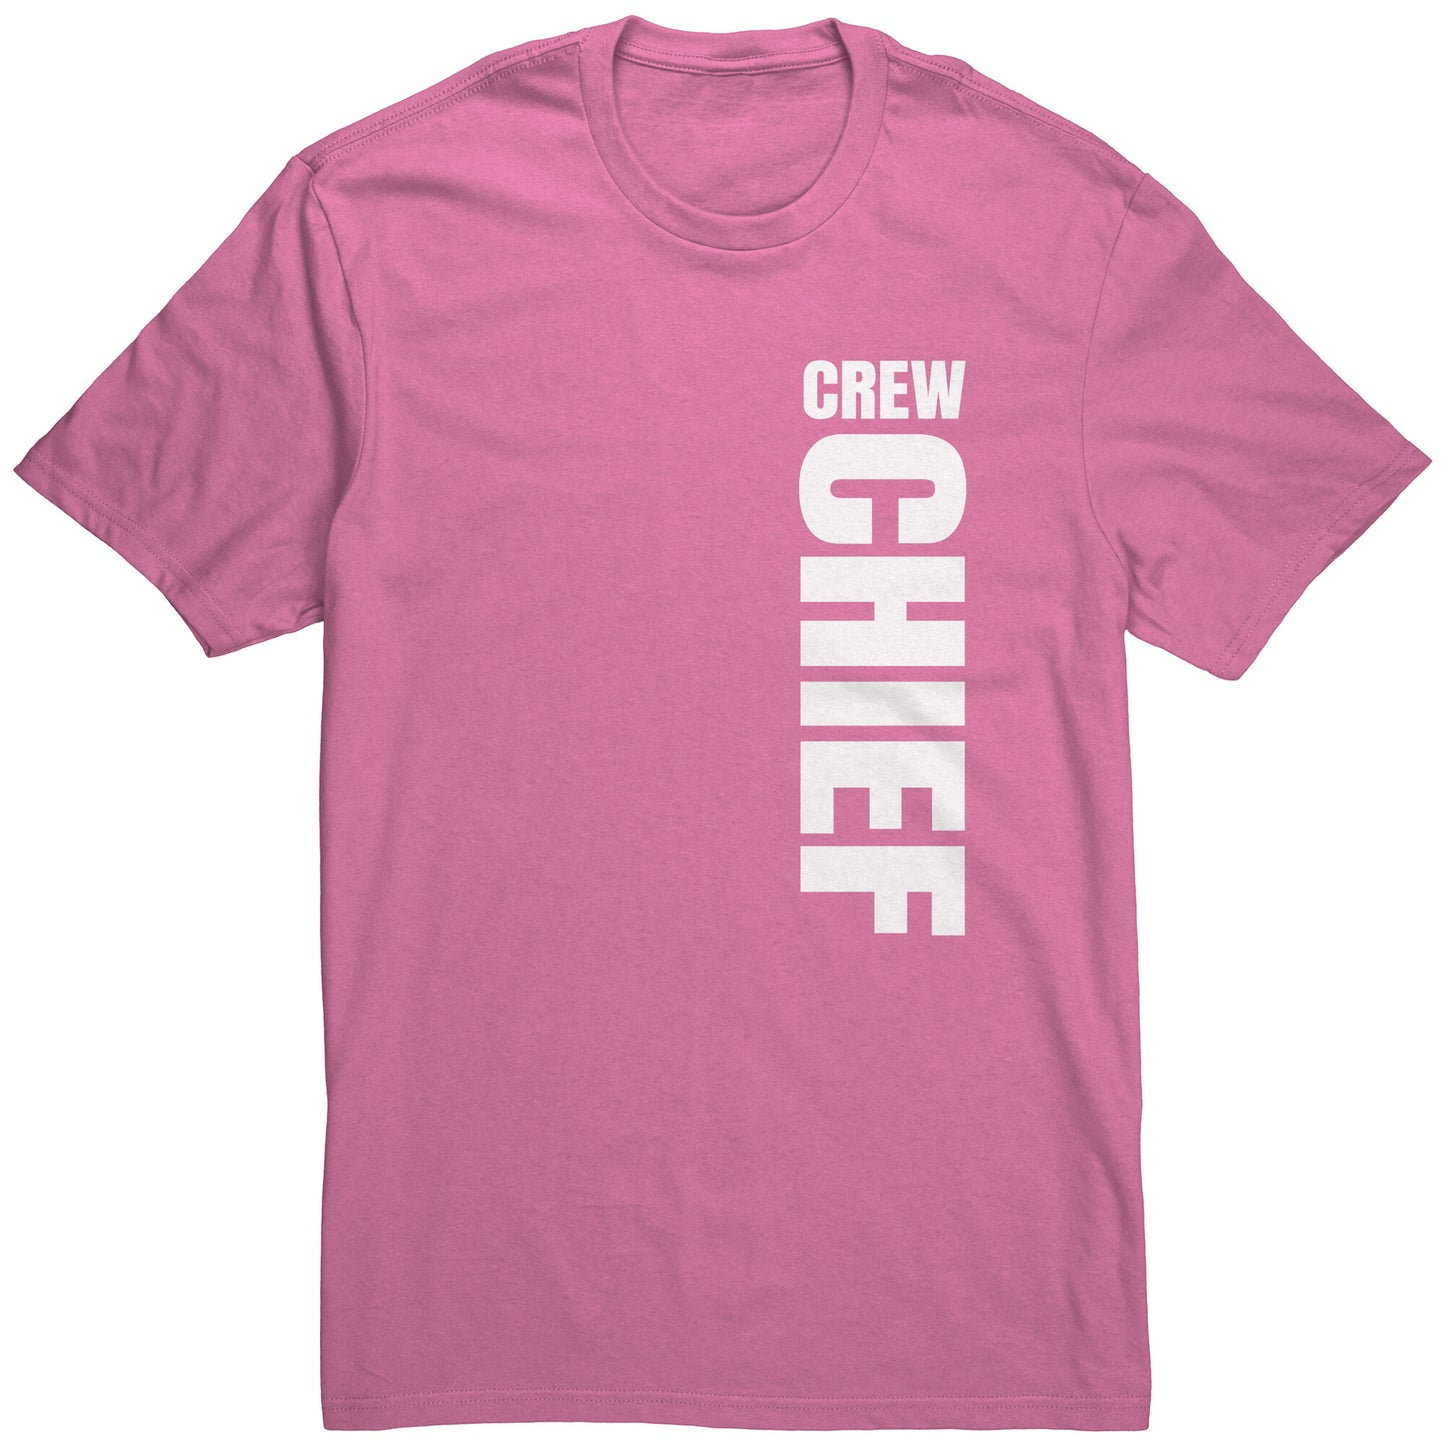 Crew Chief Side Design Men's T-Shirt